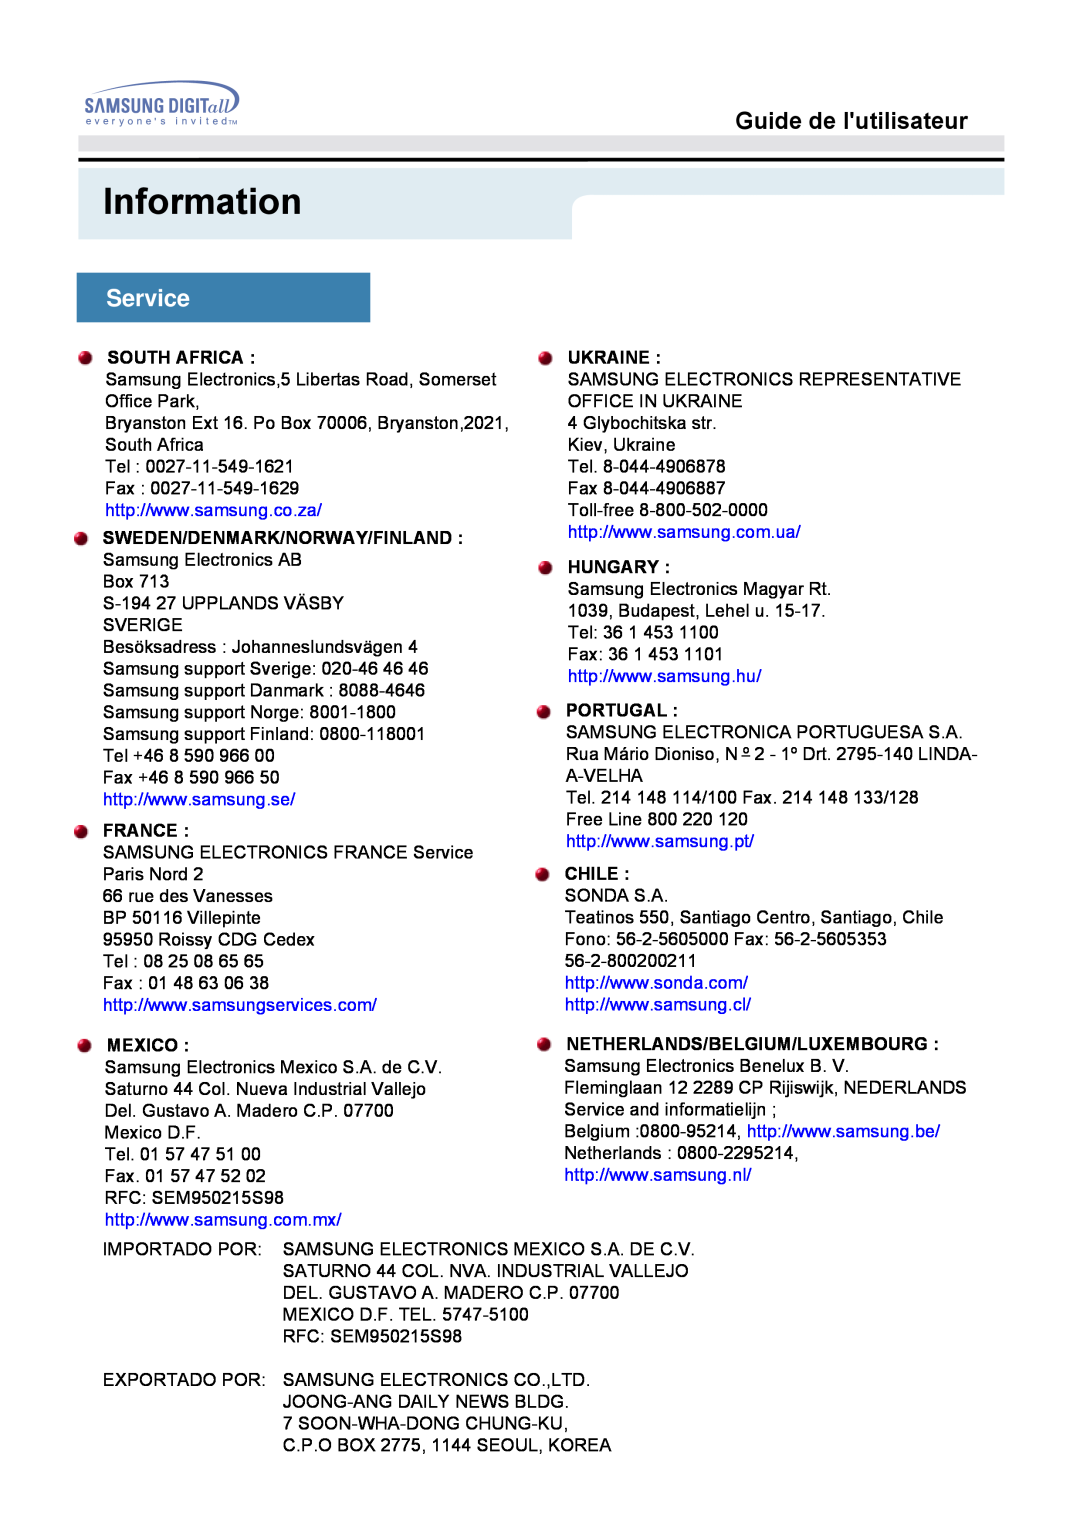 Samsung MO19PSDS Information, Guide de lutilisateur, Service, South Africa, Sweden/Denmark/Norway/Finland, France, Mexico 